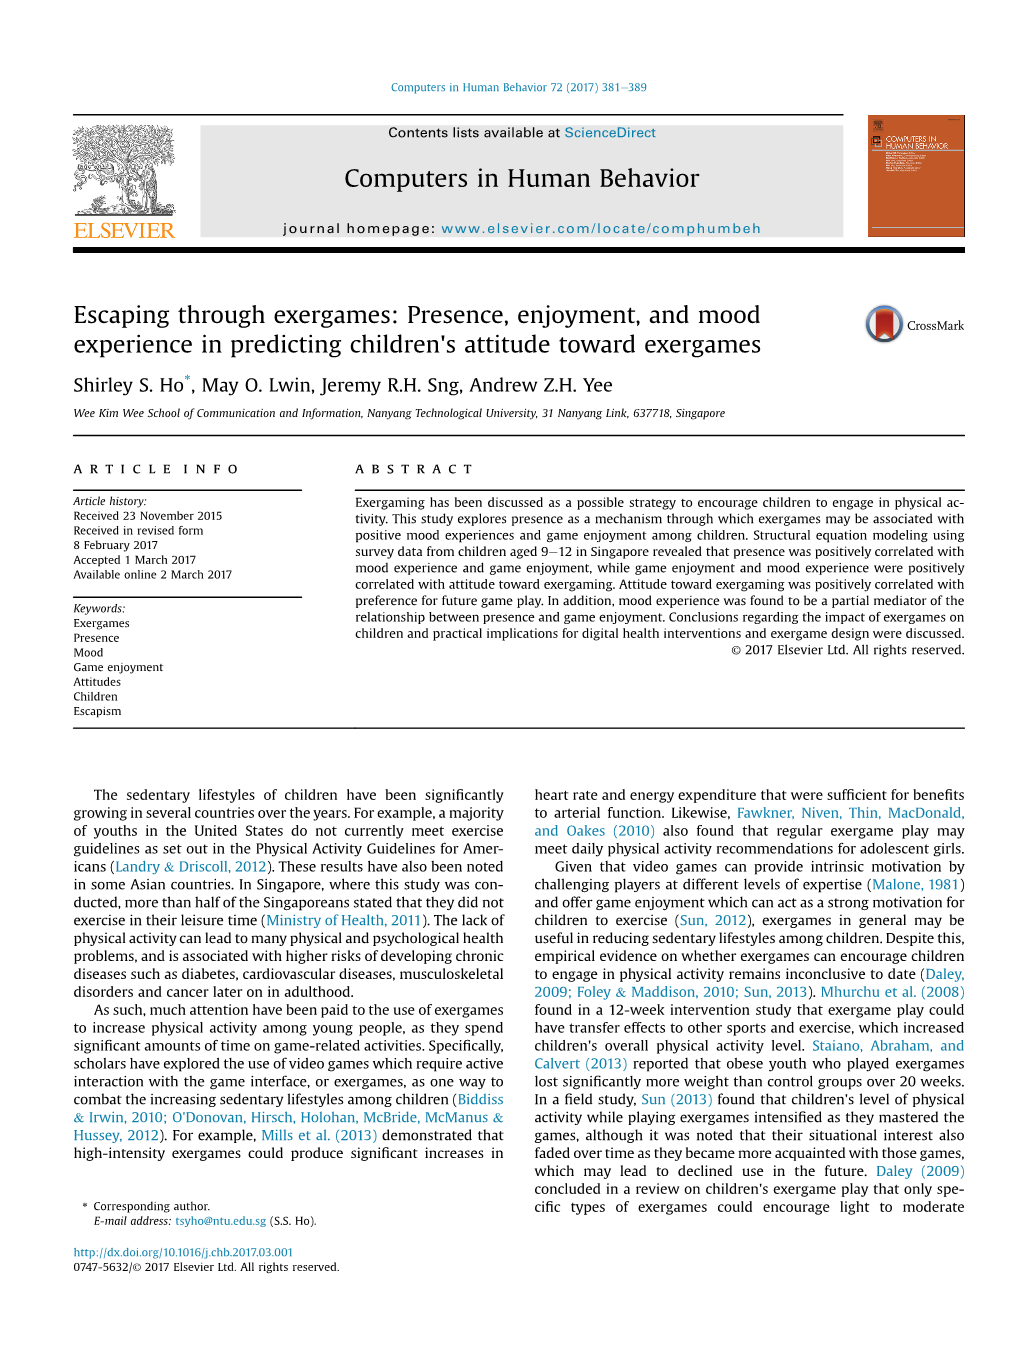 Escaping Through Exergames: Presence, Enjoyment, and Mood Experience in Predicting Children's Attitude Toward Exergames